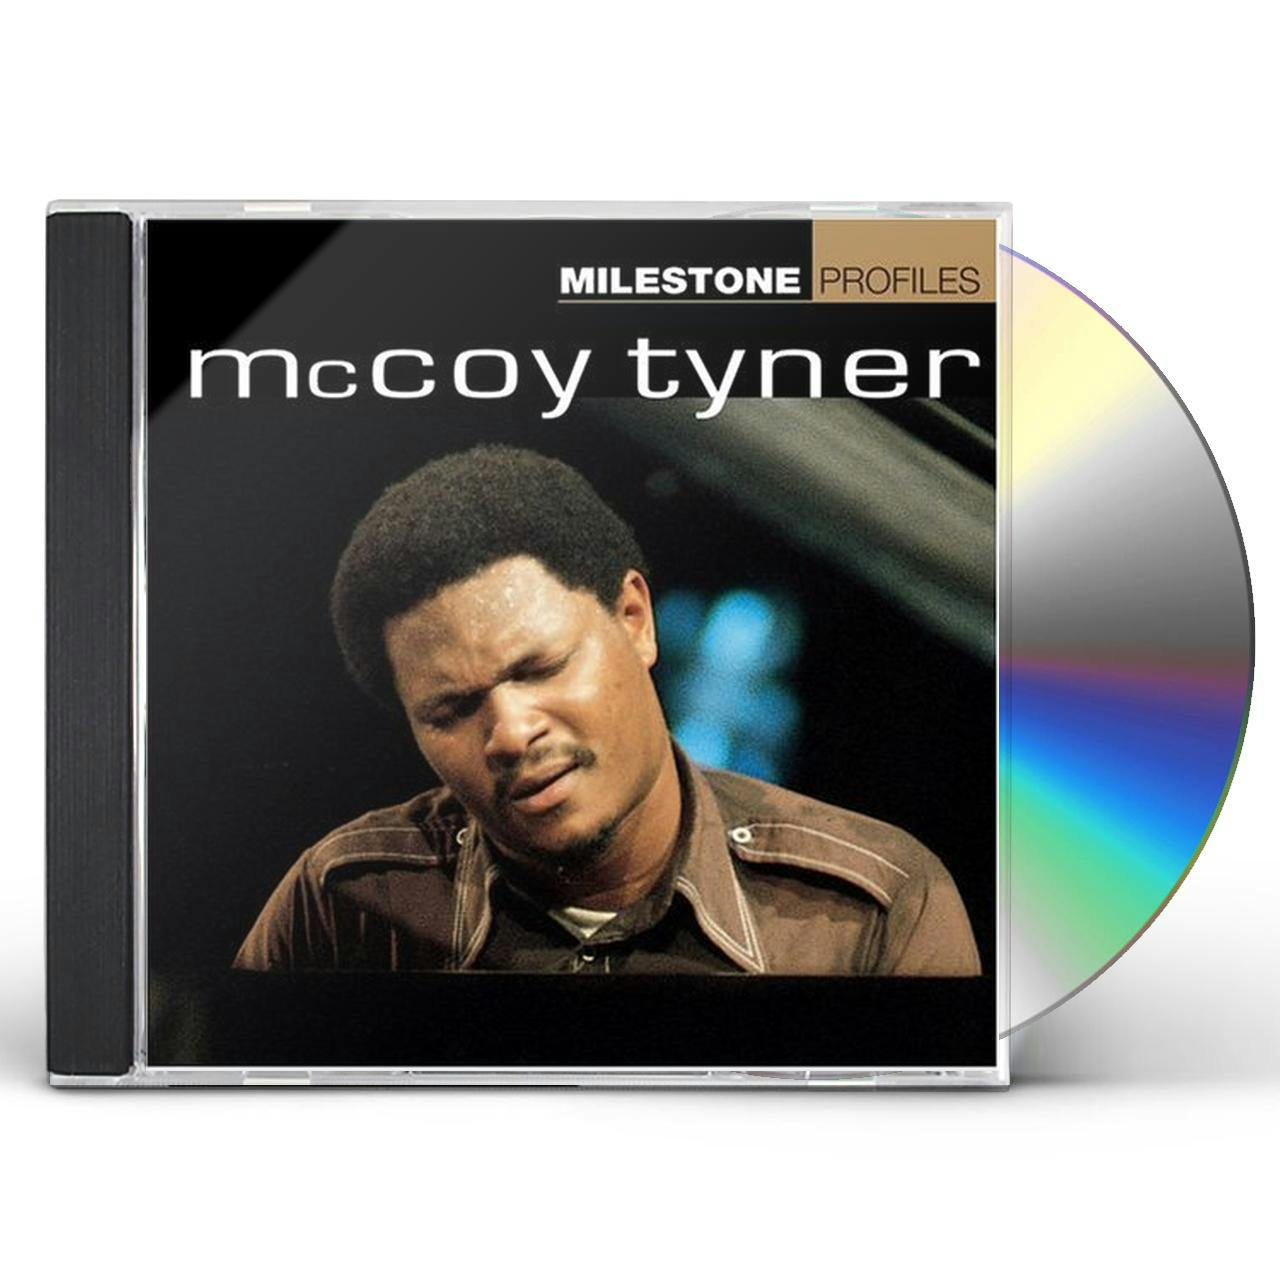 McCoy Tyner Milestone Profiles - 1